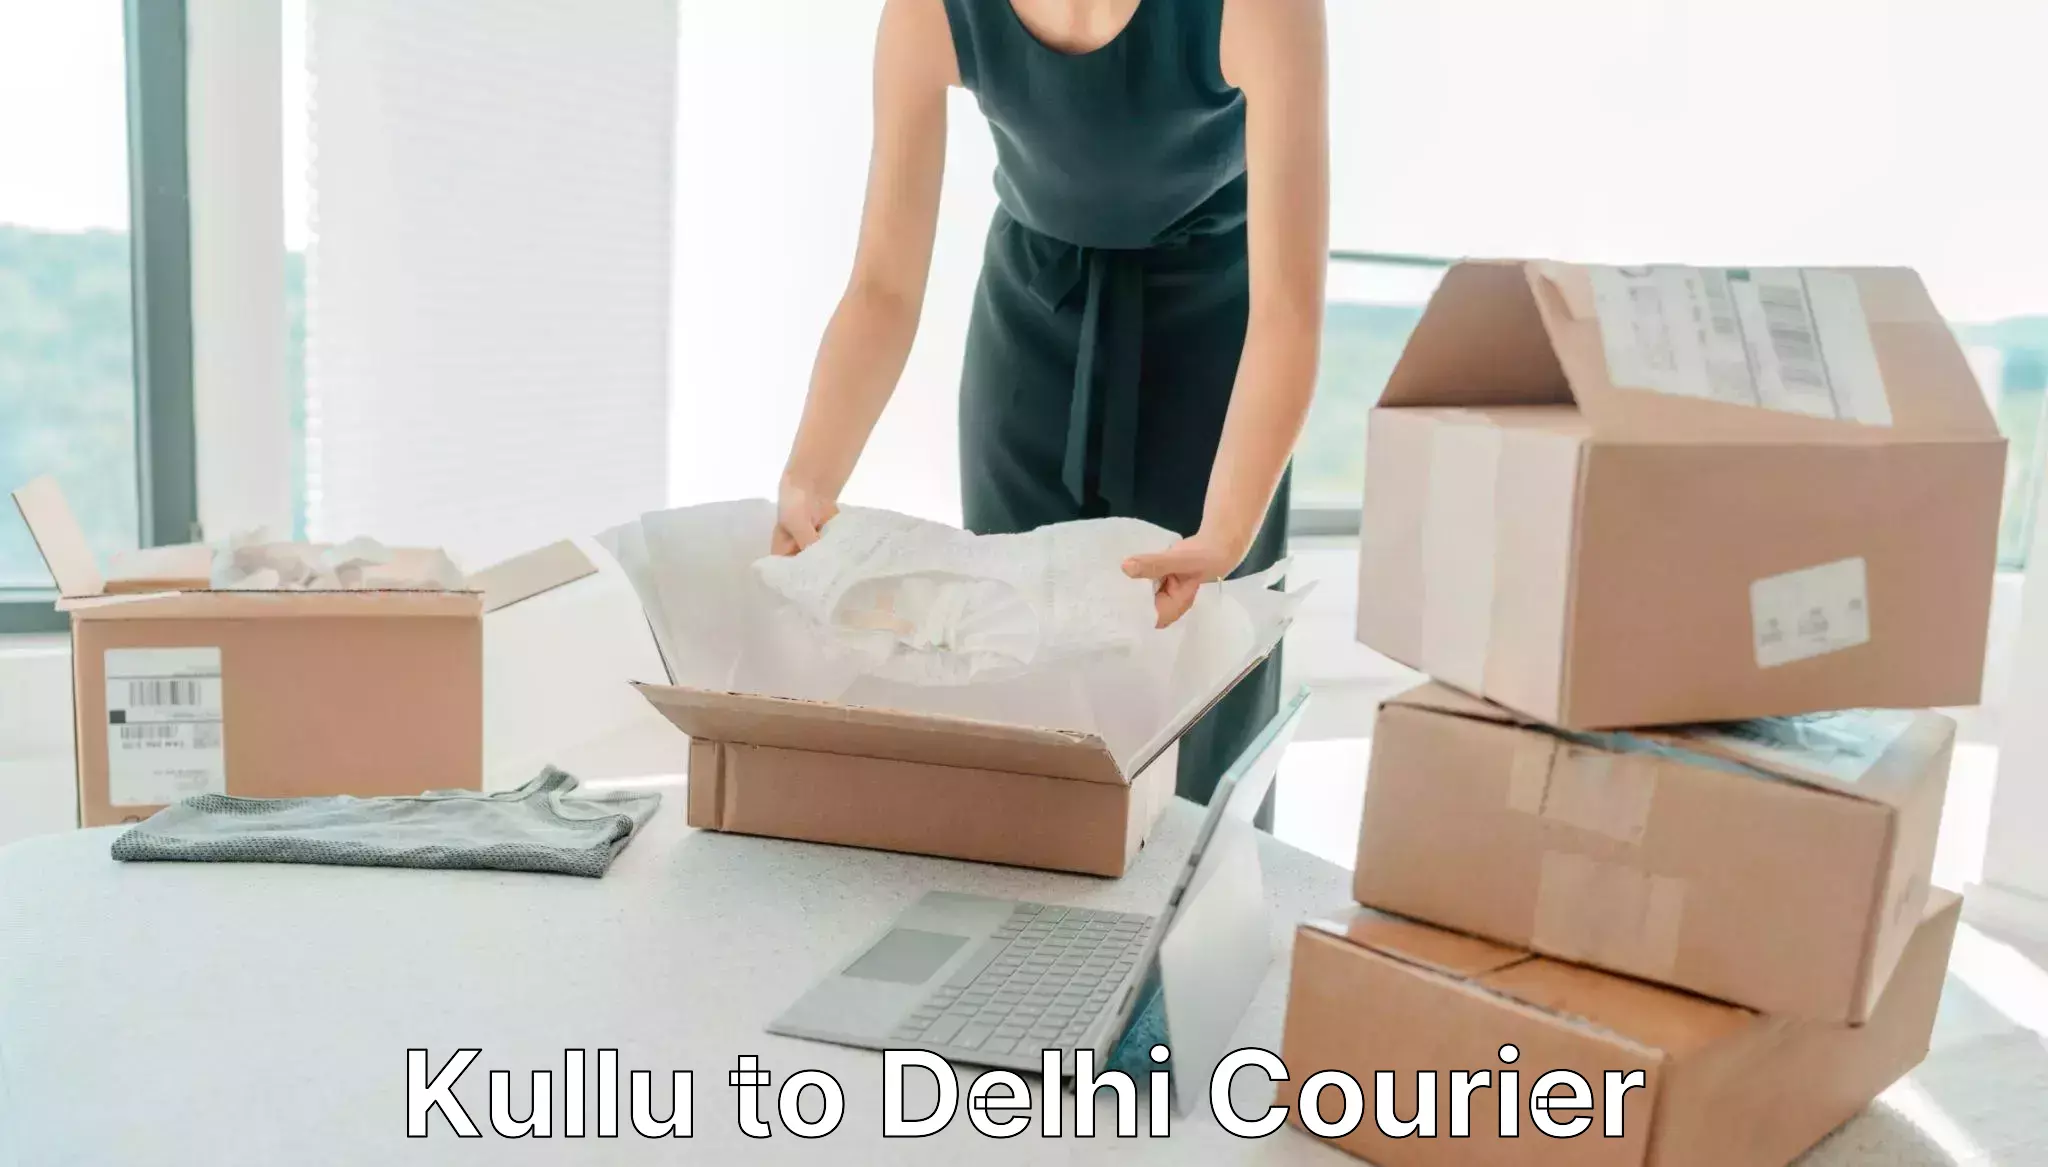 Courier service comparison Kullu to Delhi